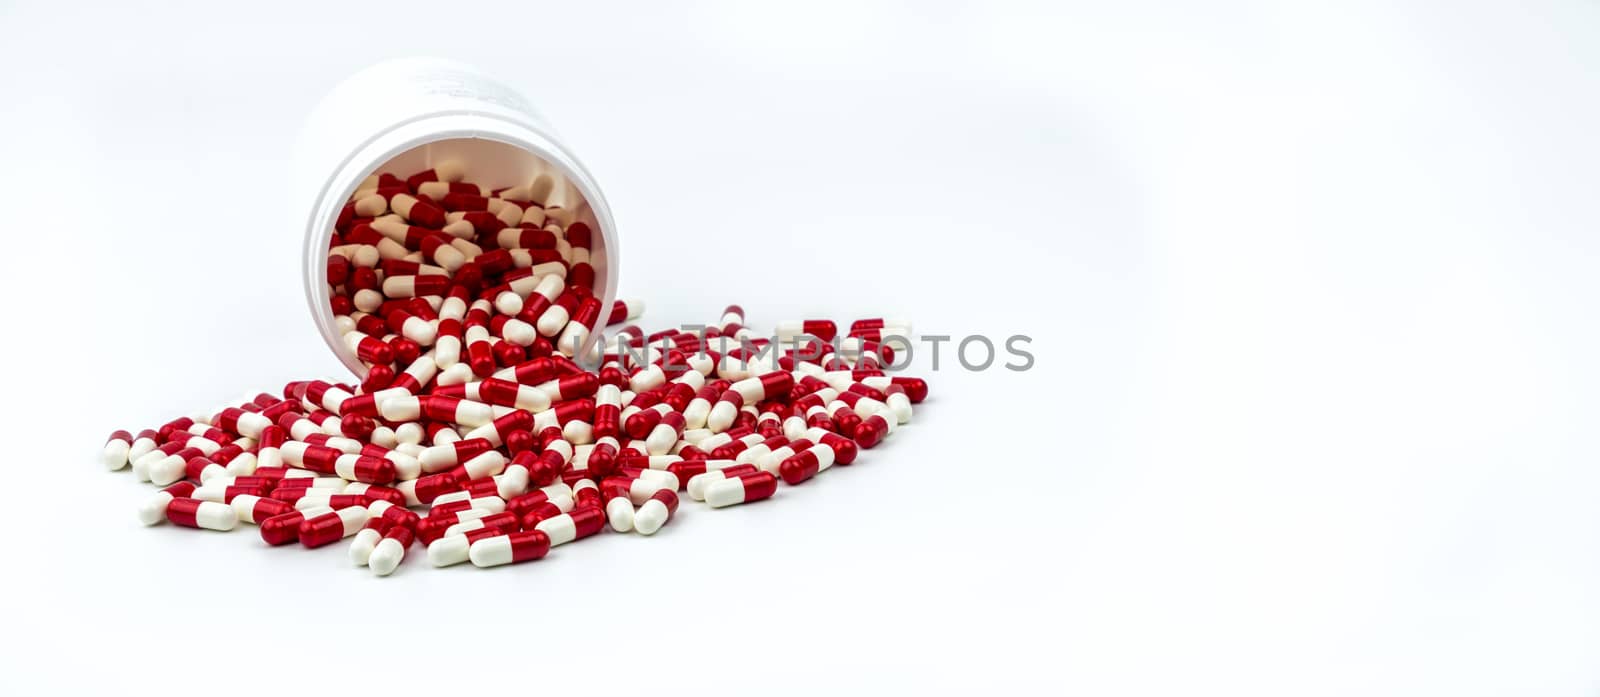 Colorful of antibiotic capsules pills with plastic bottle isolated on white background. Drug resistance, antibiotic drug use with reasonable. Antibiotics drug overuse. Pharmaceutical industry. Pharmacy background. by Fahroni